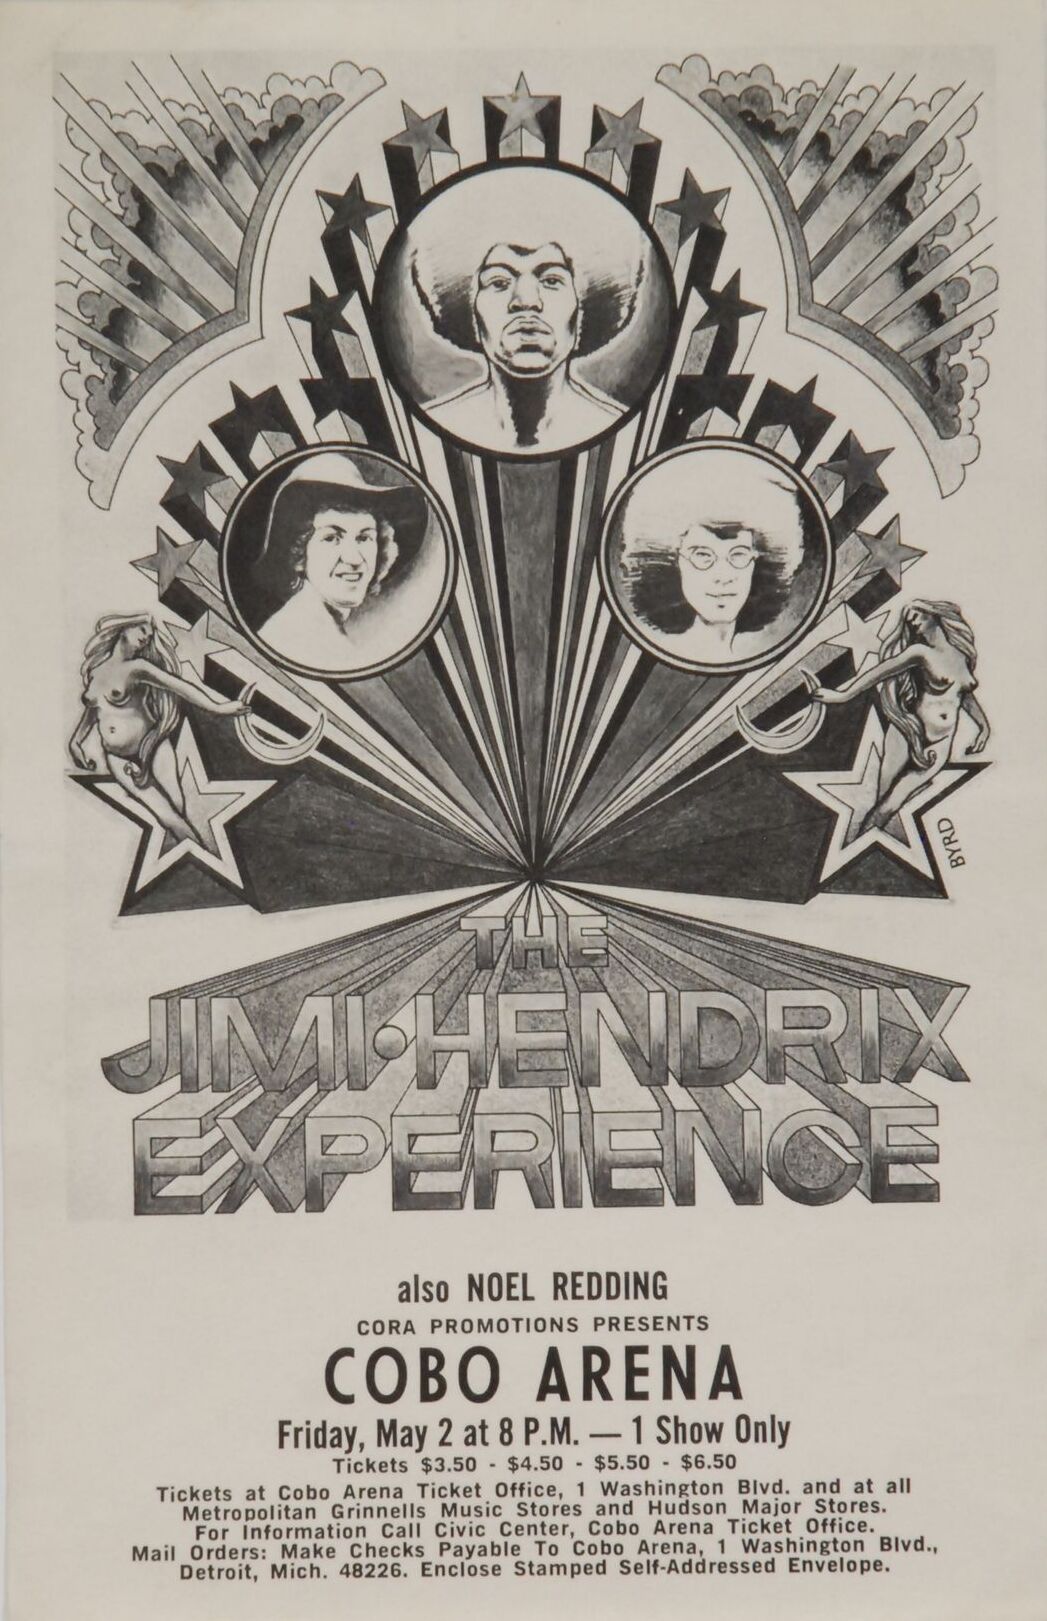 Jimi Hendrix Experience Cobo Arena 1969 Concert Poster